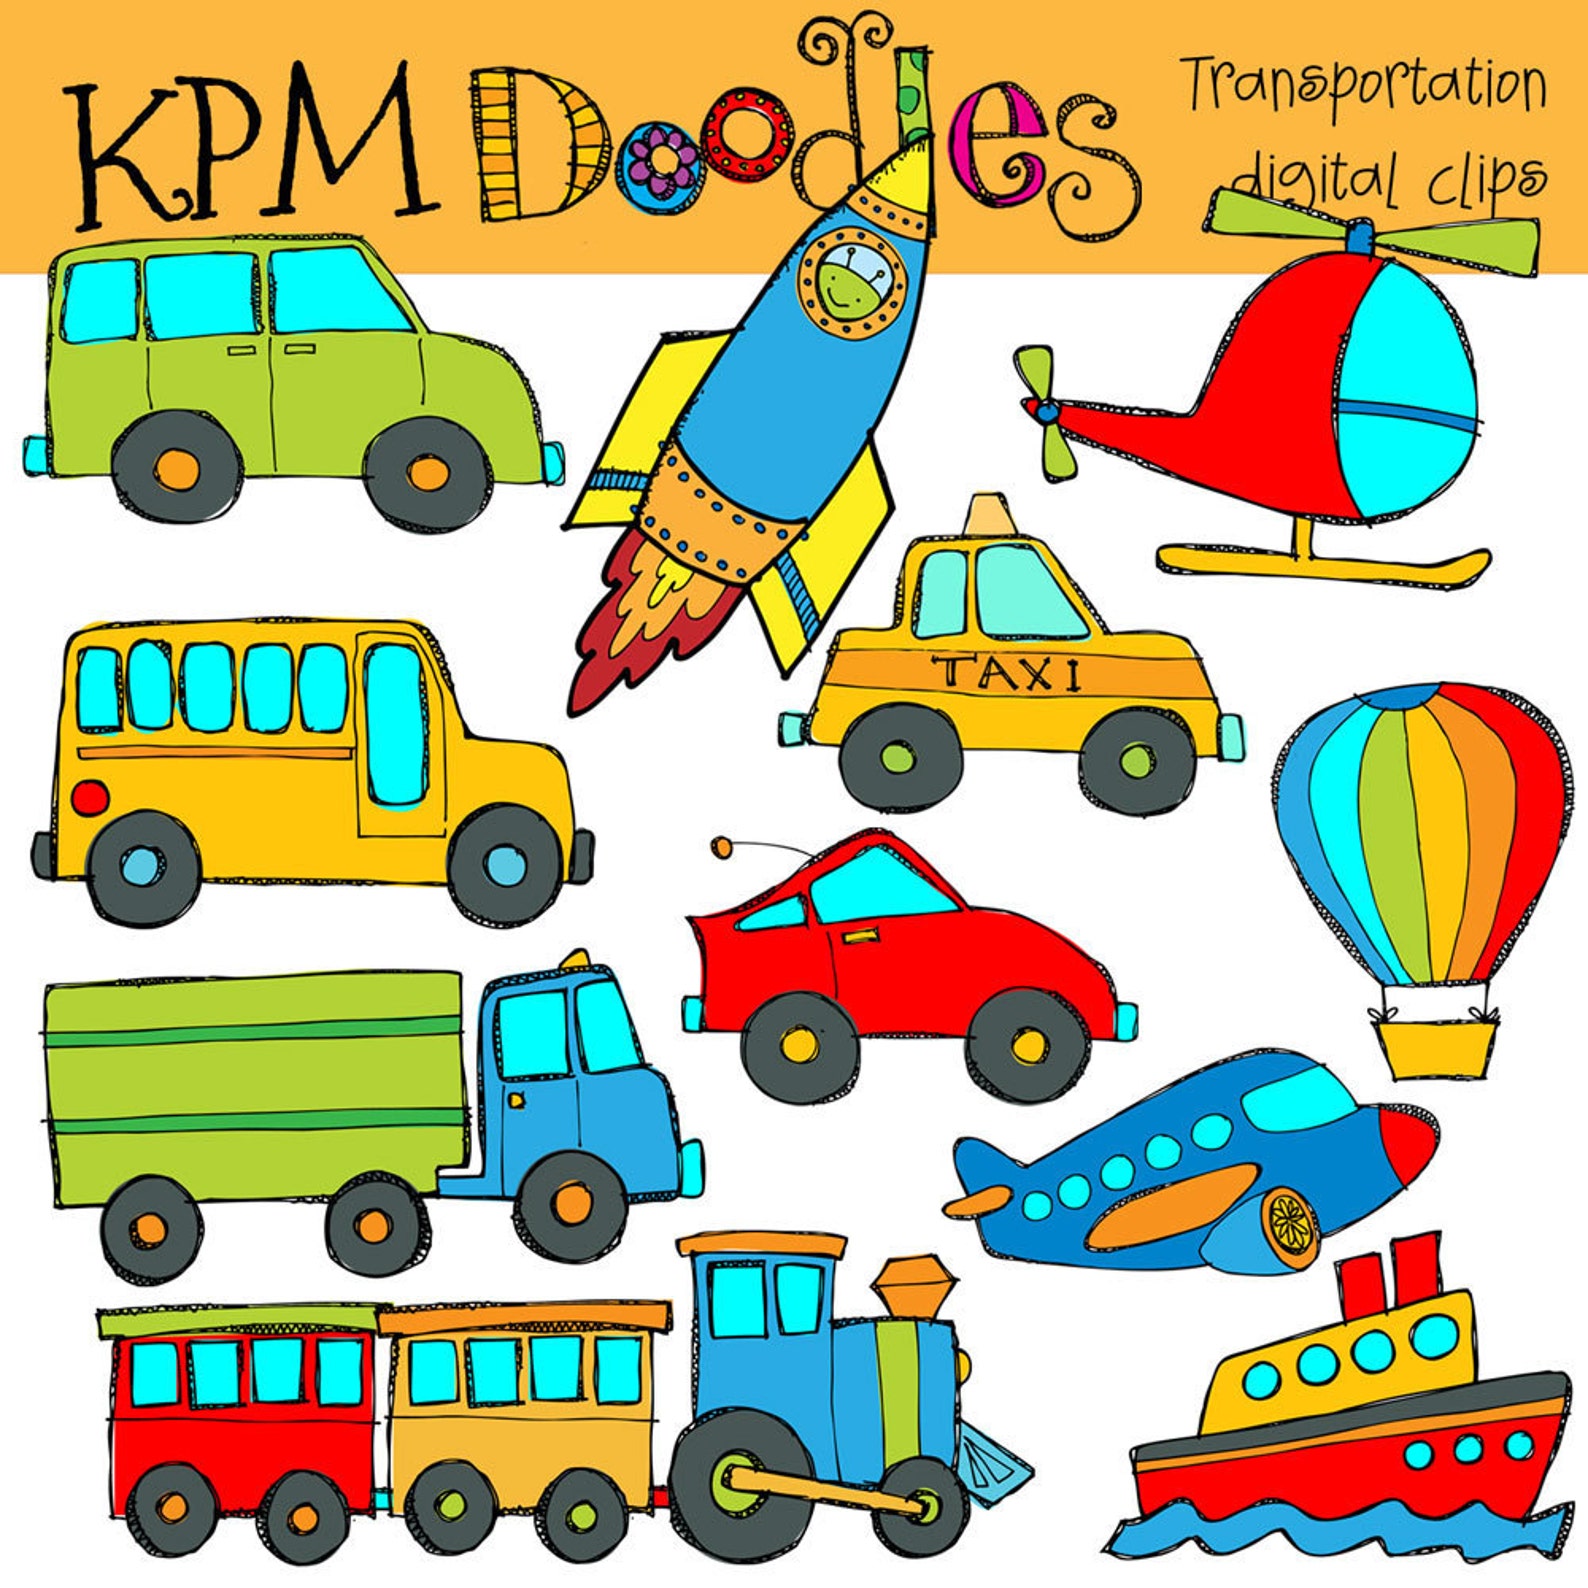 Transport picture. Детские картинки транспорт. Мультяшные картинки транспорта. Transport for Kids. Transportation for Kids.